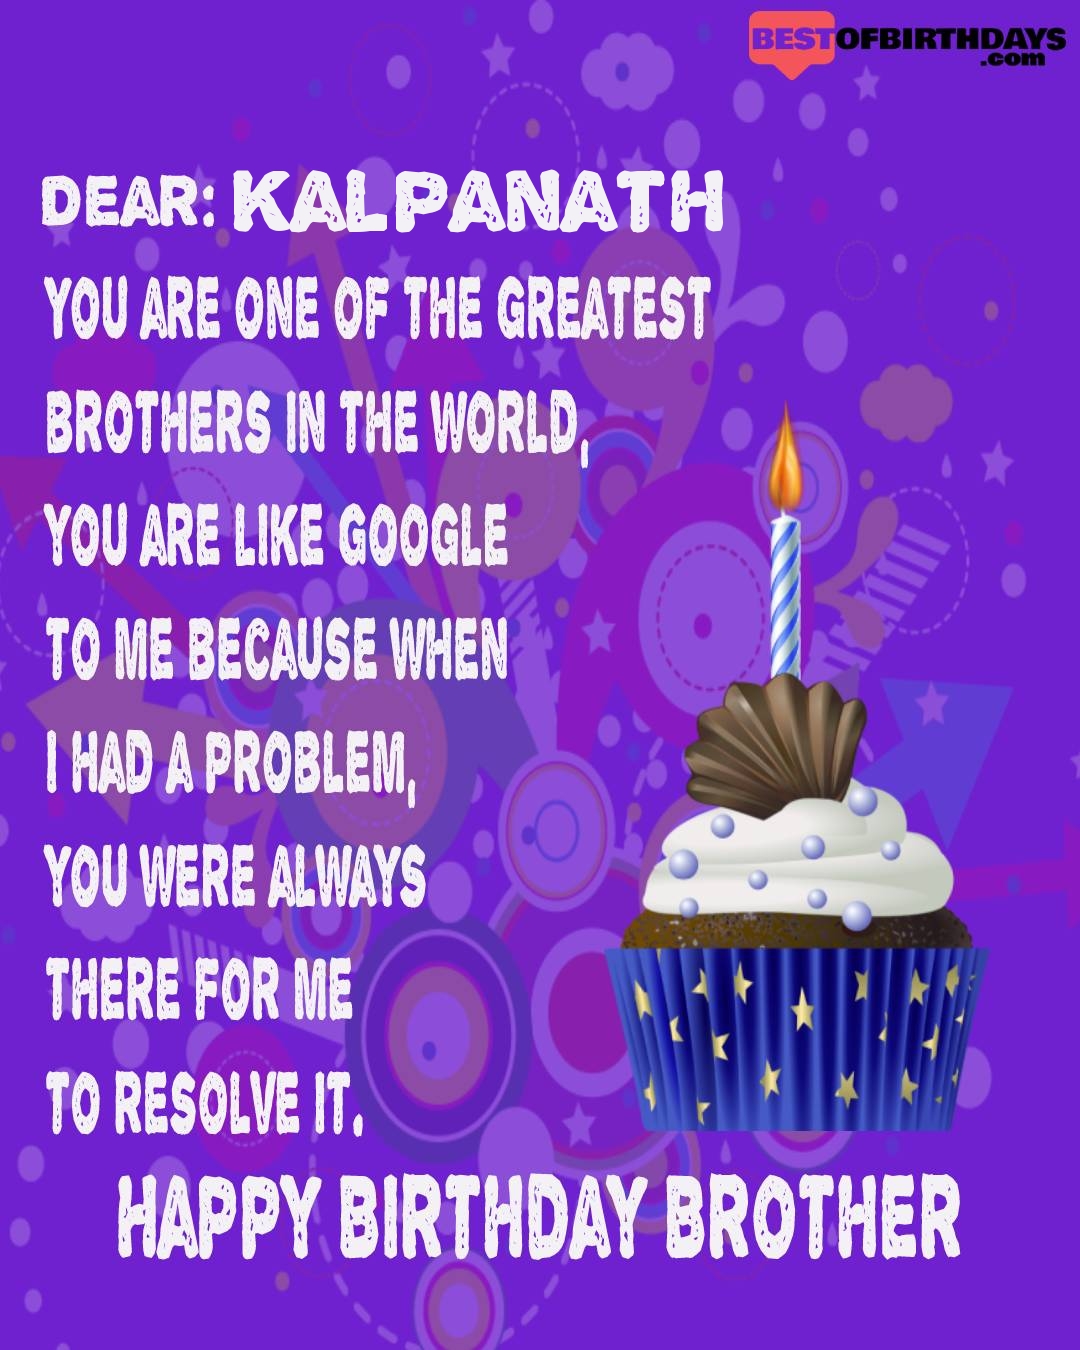 Happy birthday kalpanath bhai brother bro